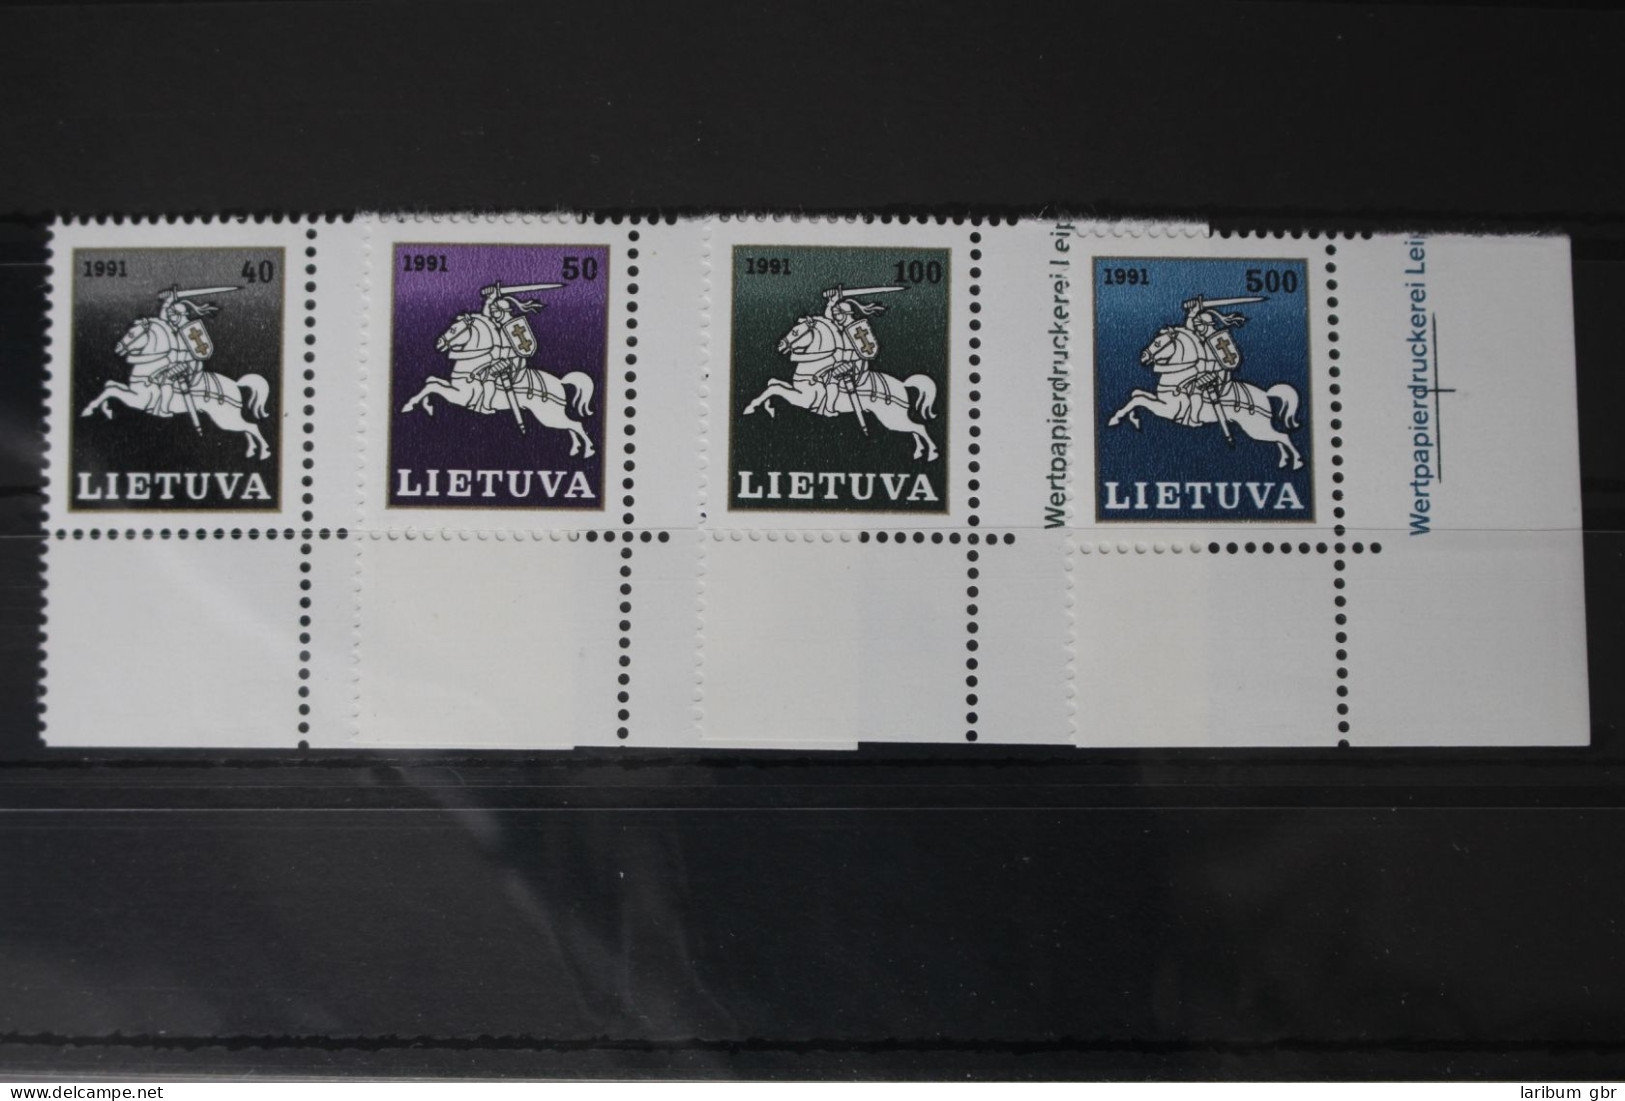 Litauen 491-494 Postfrisch #WD072 - Lithuania